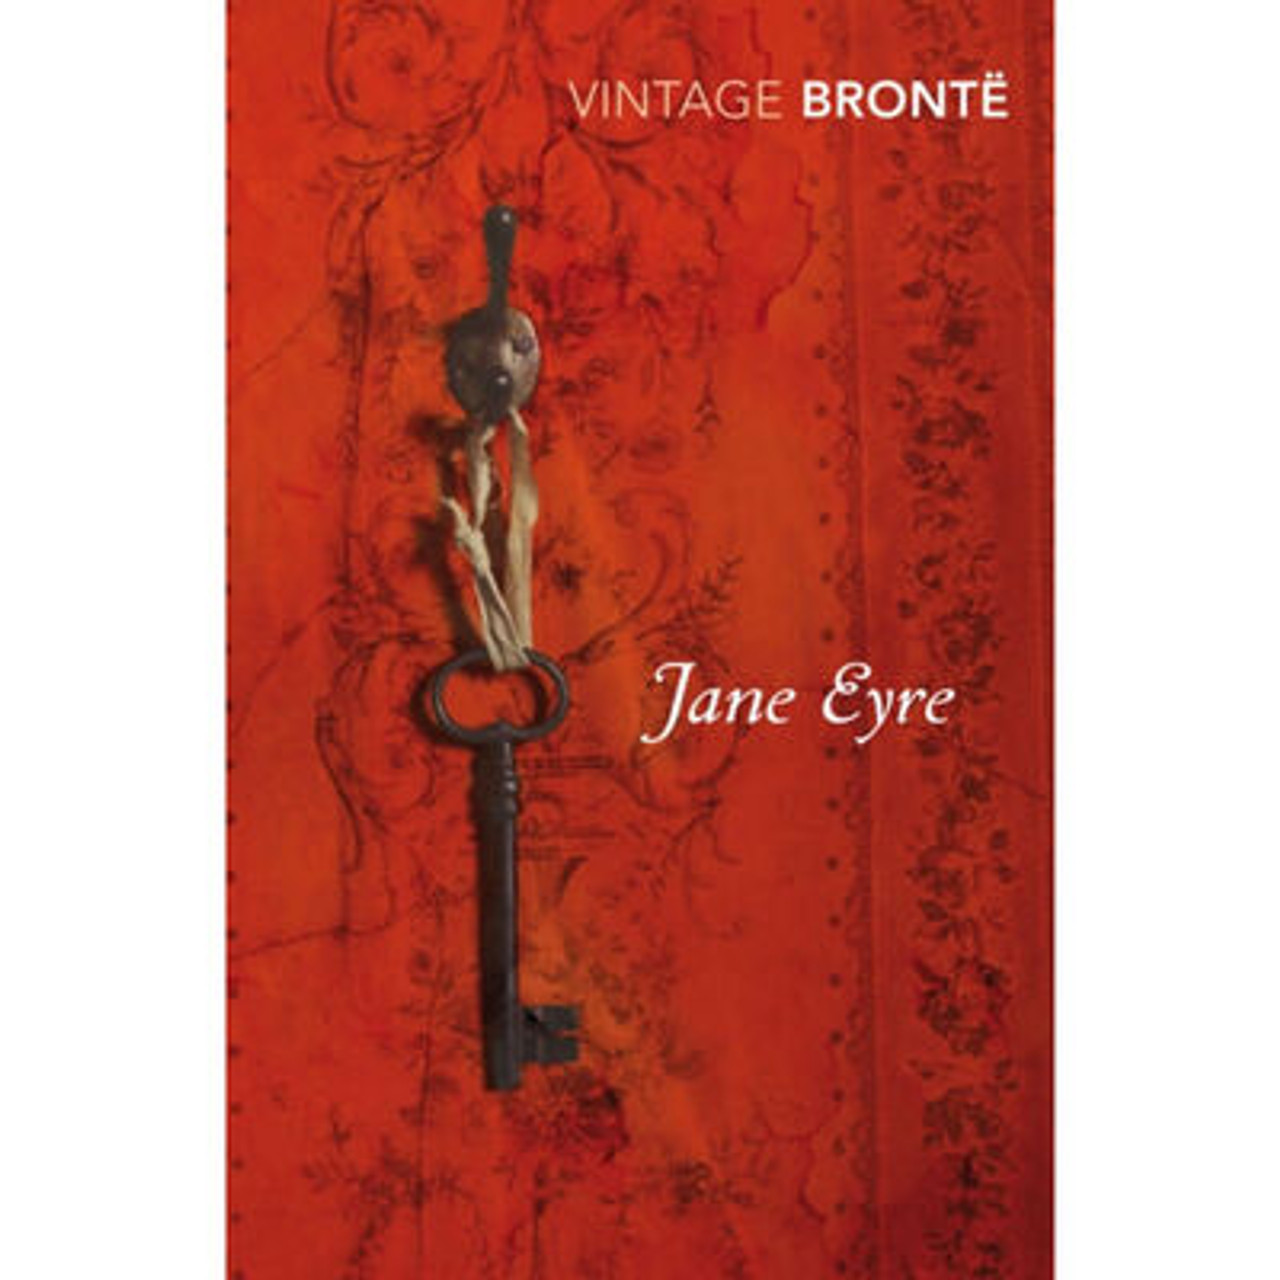 Bronte, Charlotte - Jane Eyre  - PB - BRAND NEW CLASSIC